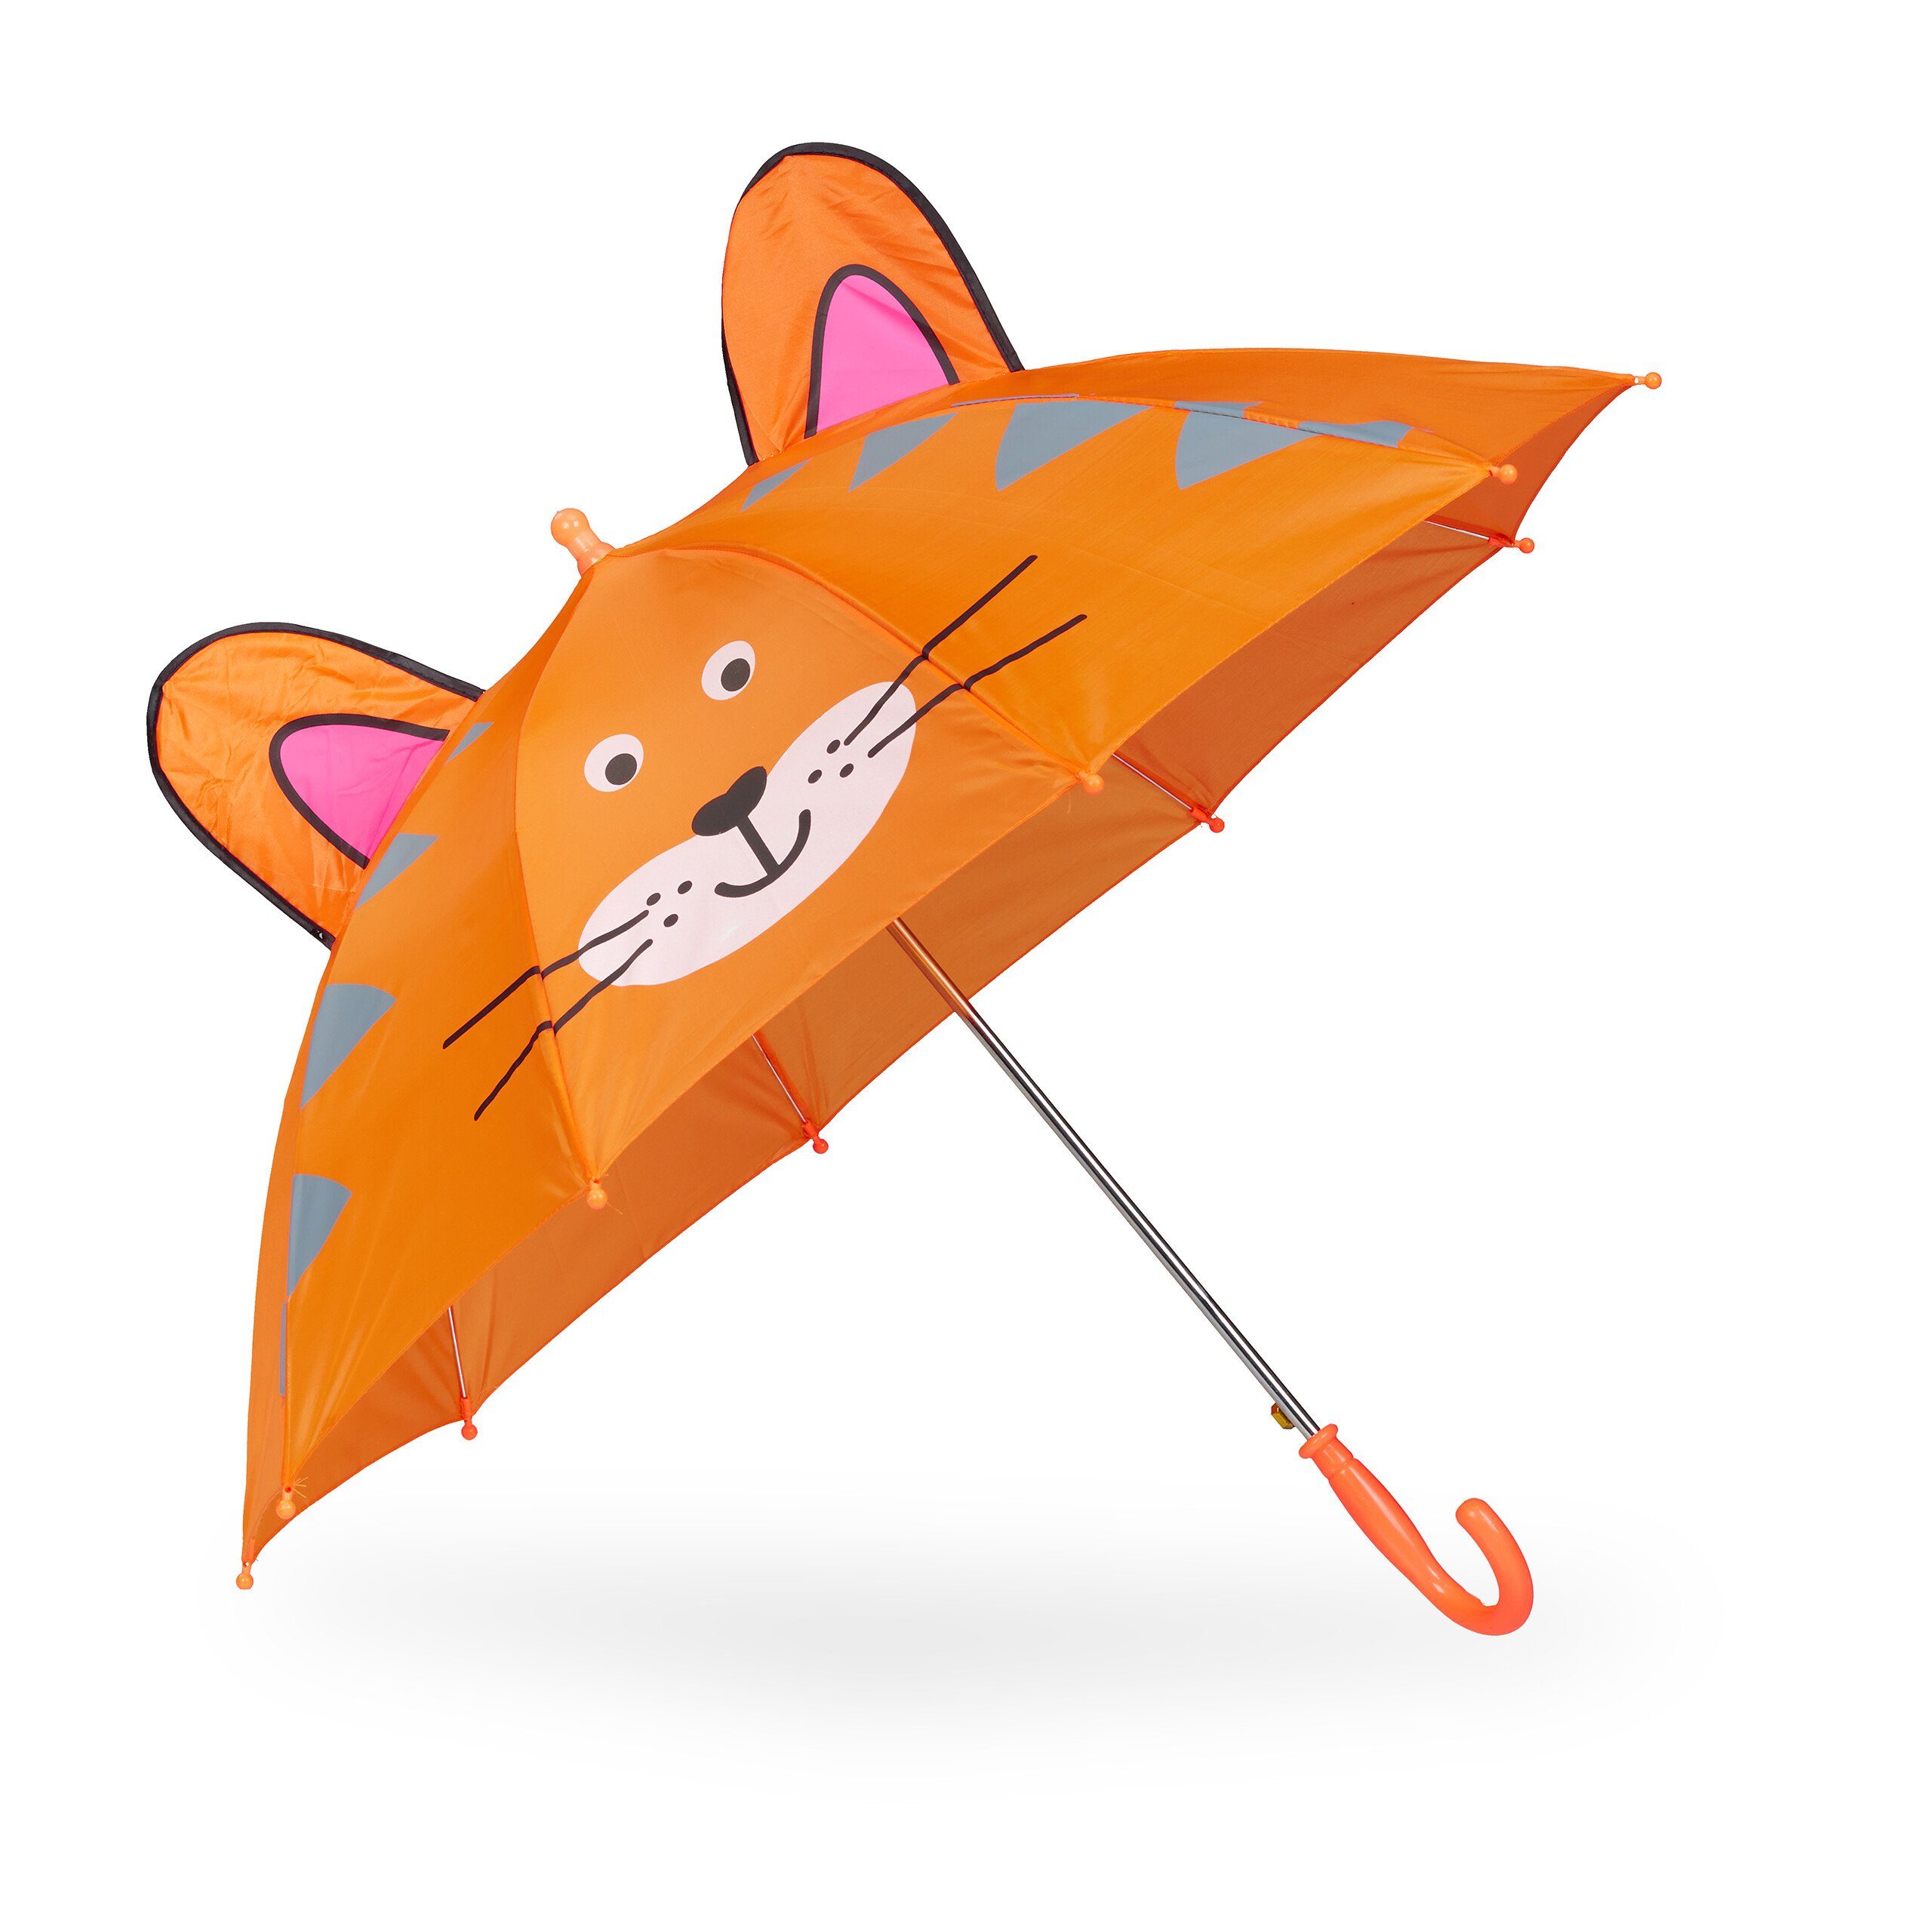 billig relaxdays Stockregenschirm Kinder "Tiger" Regenschirm